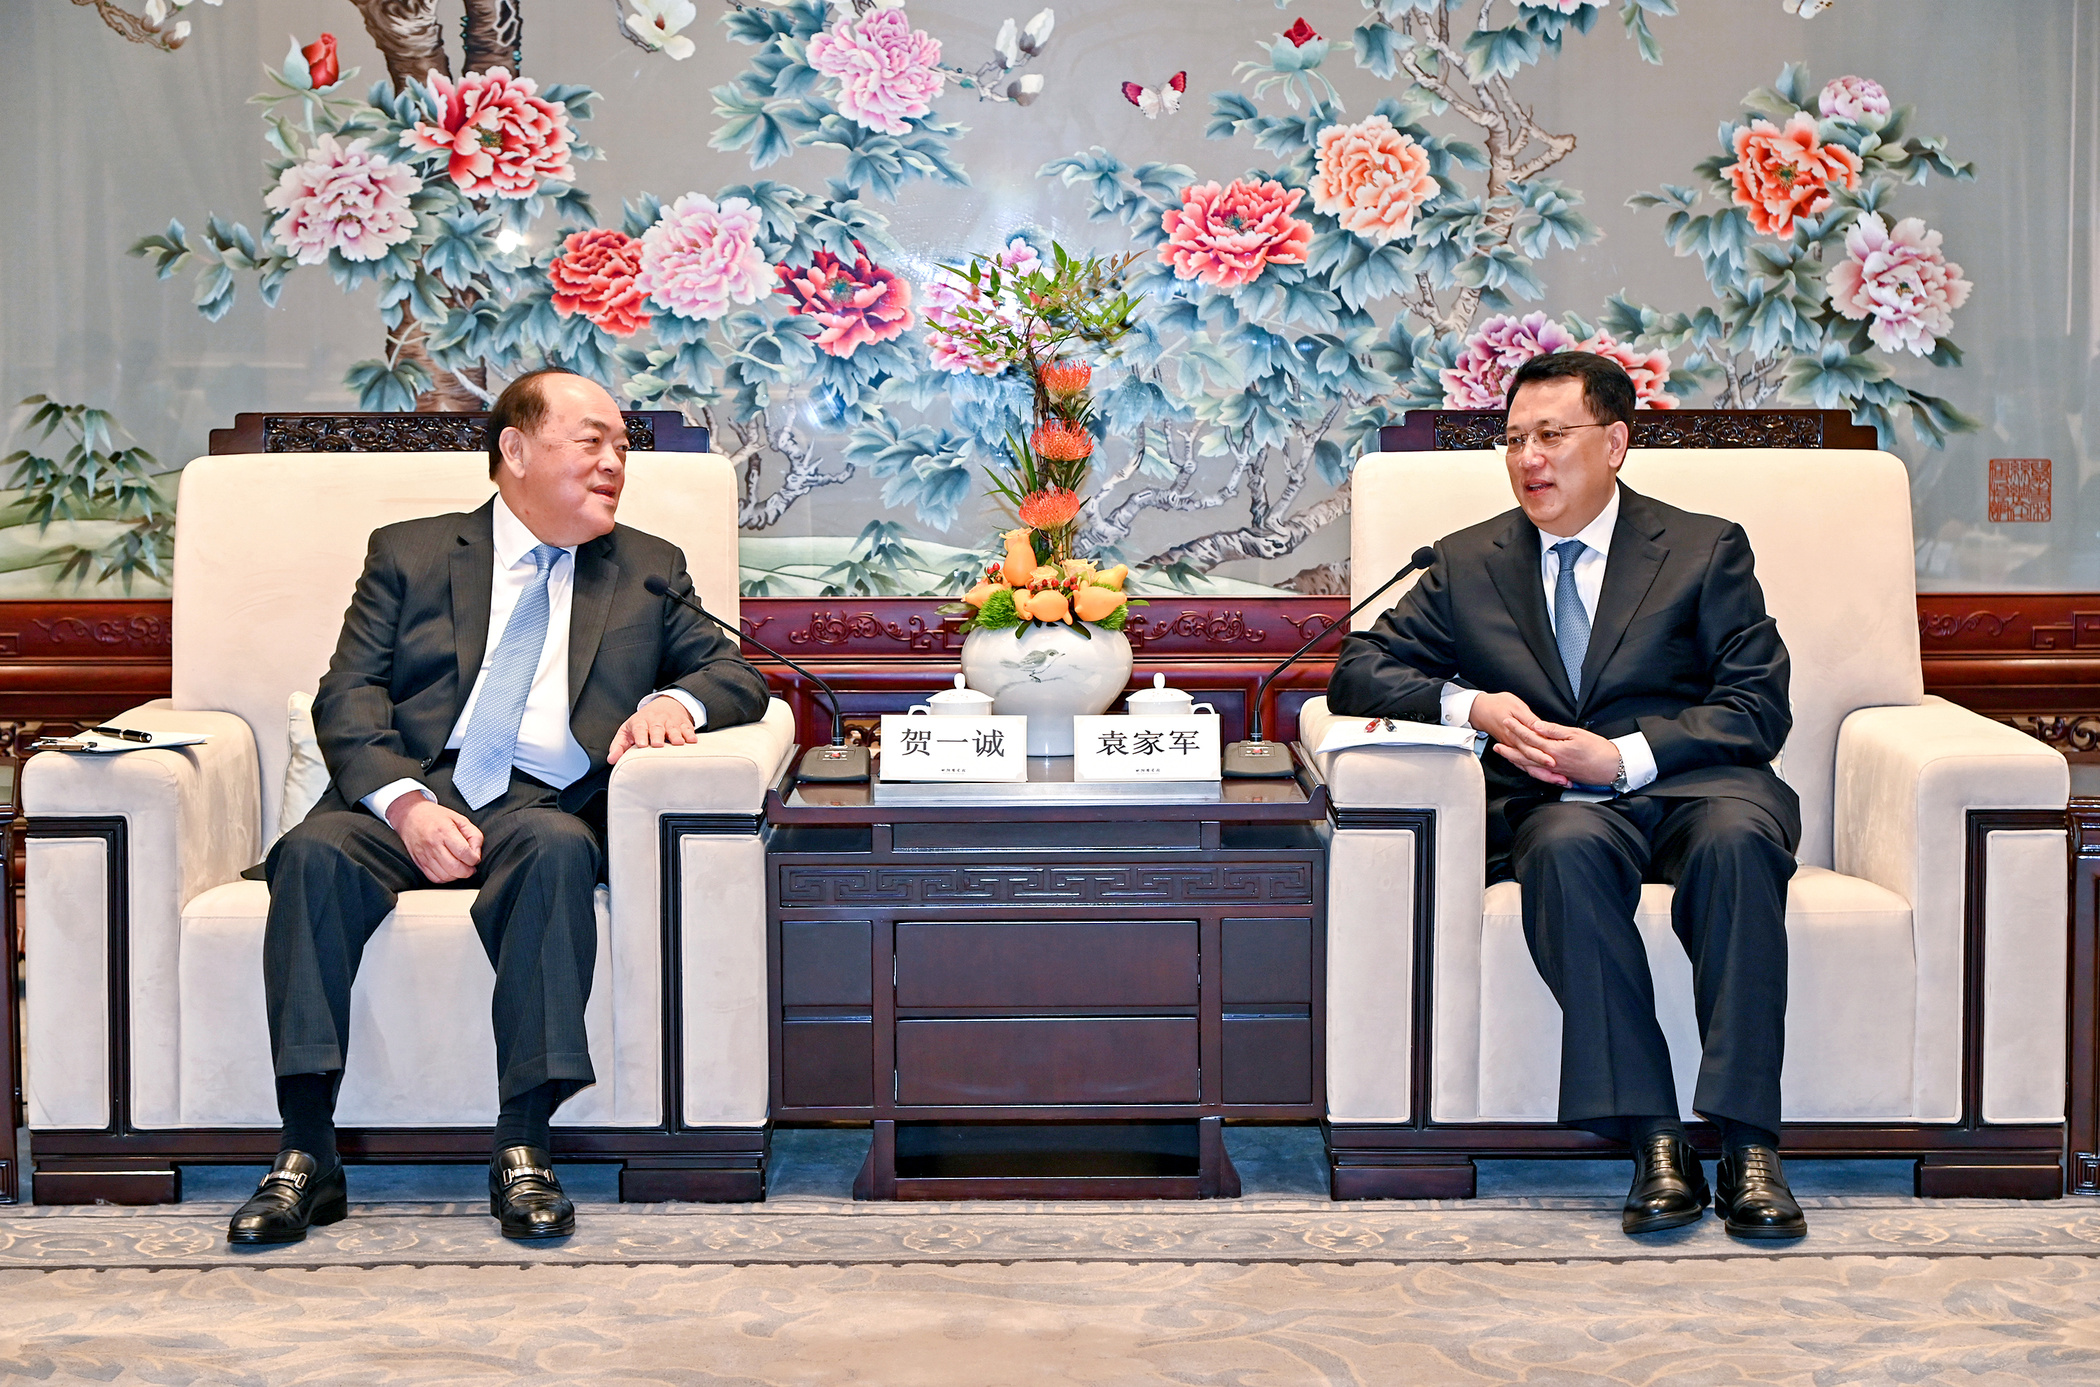 Chief Executive Ho Iat Seng foresees stronger Macao-Zhejiang ties